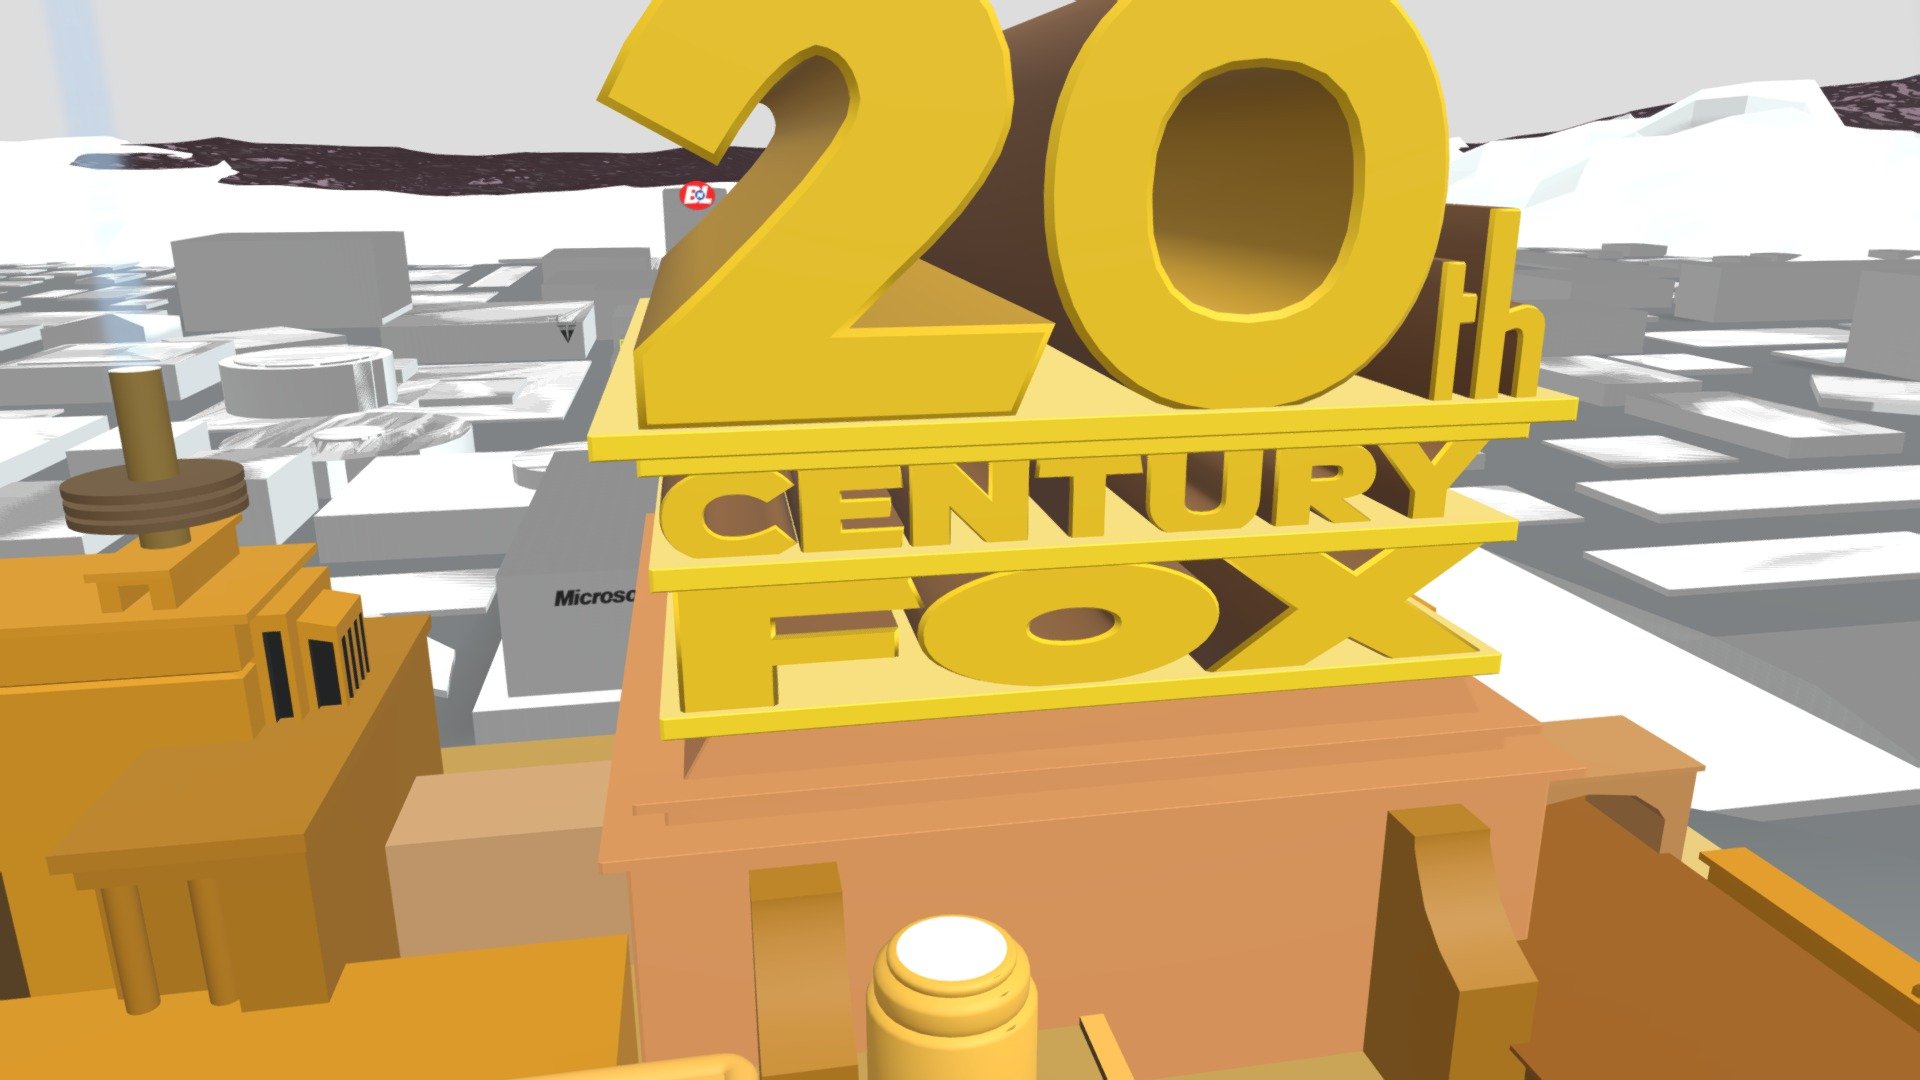 20th century fox logo minecraft